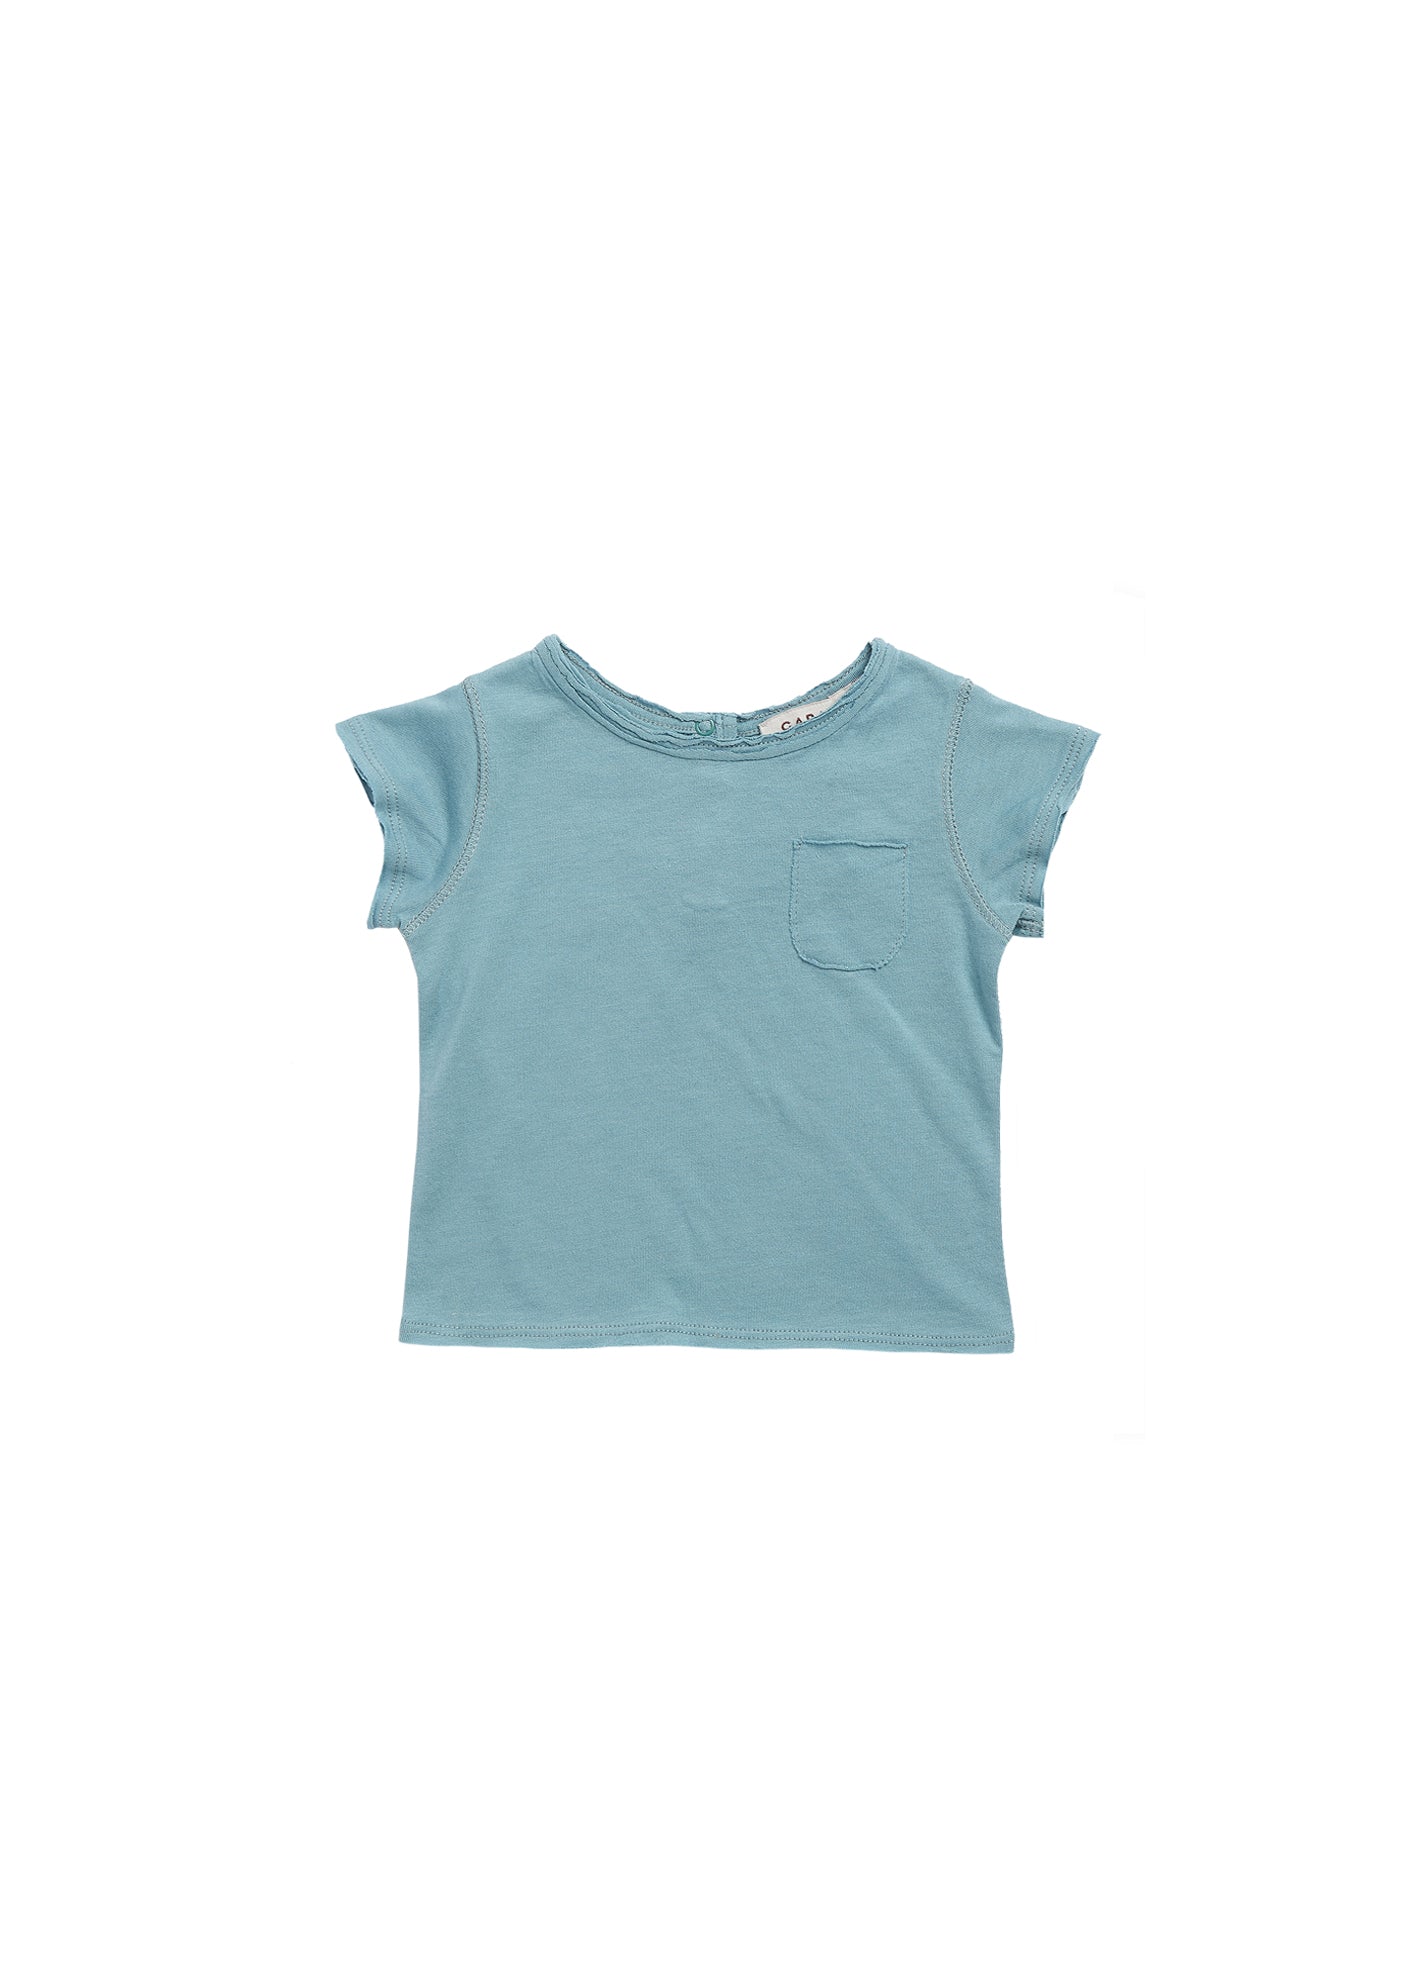 Baby Boys & Girls Light Blue Cotton T-shirt